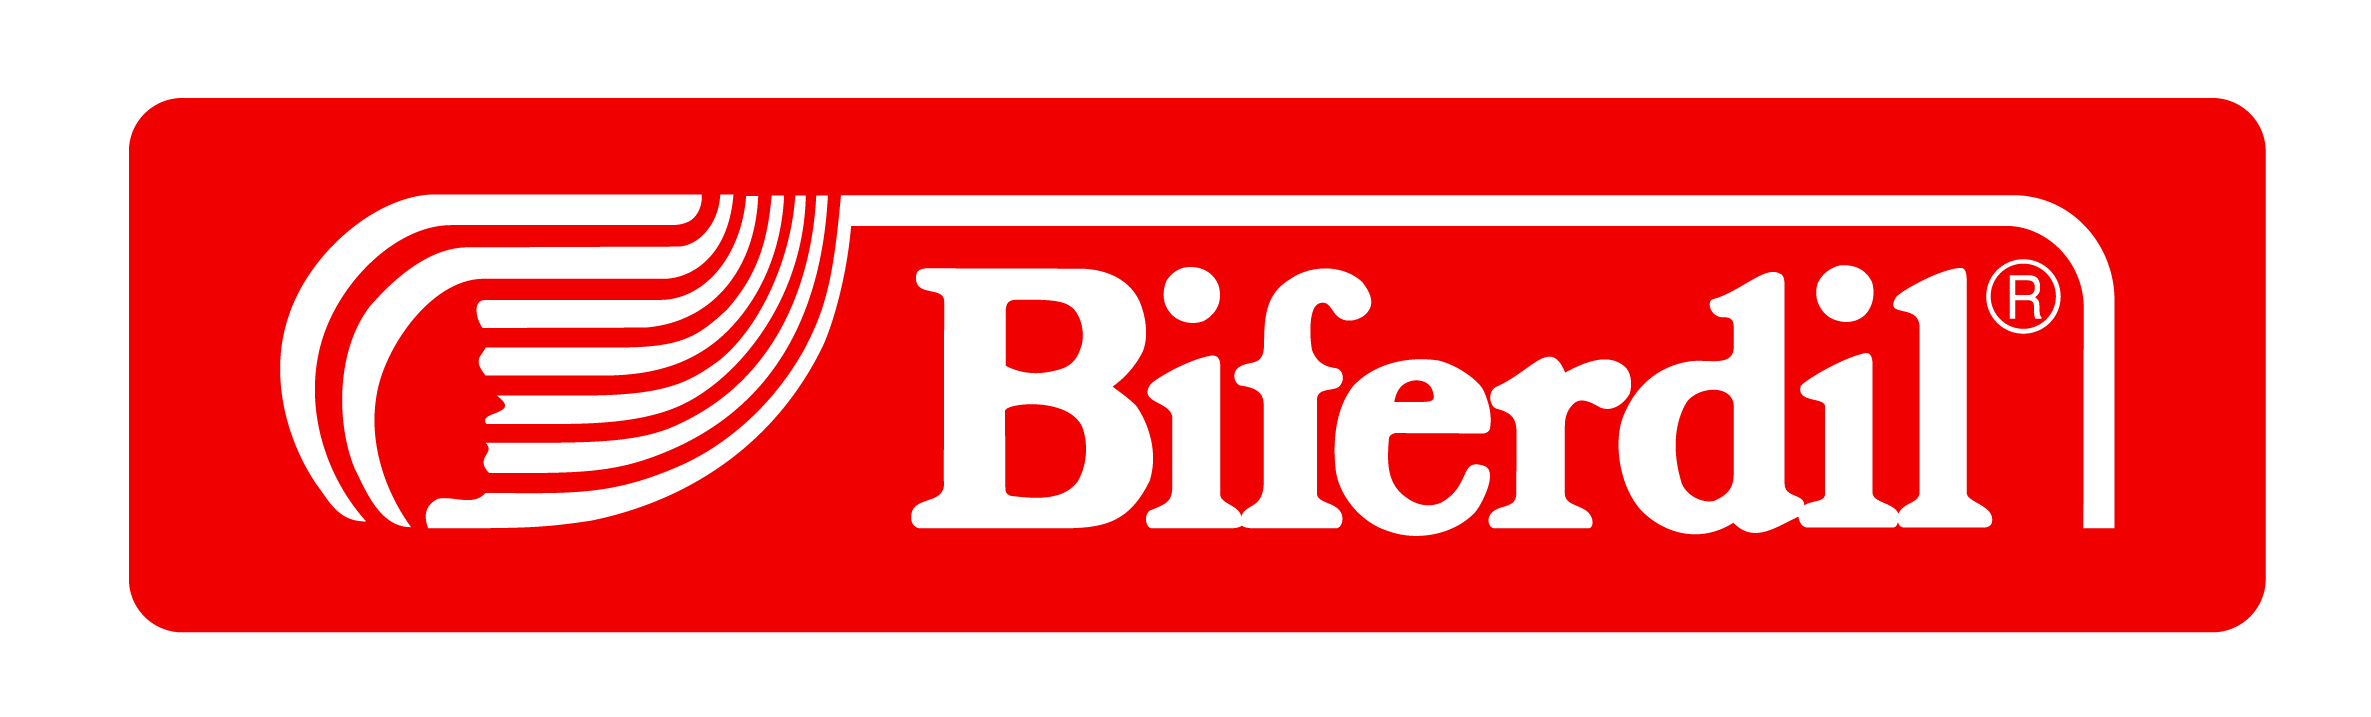 Biferdil Logo photo - 1